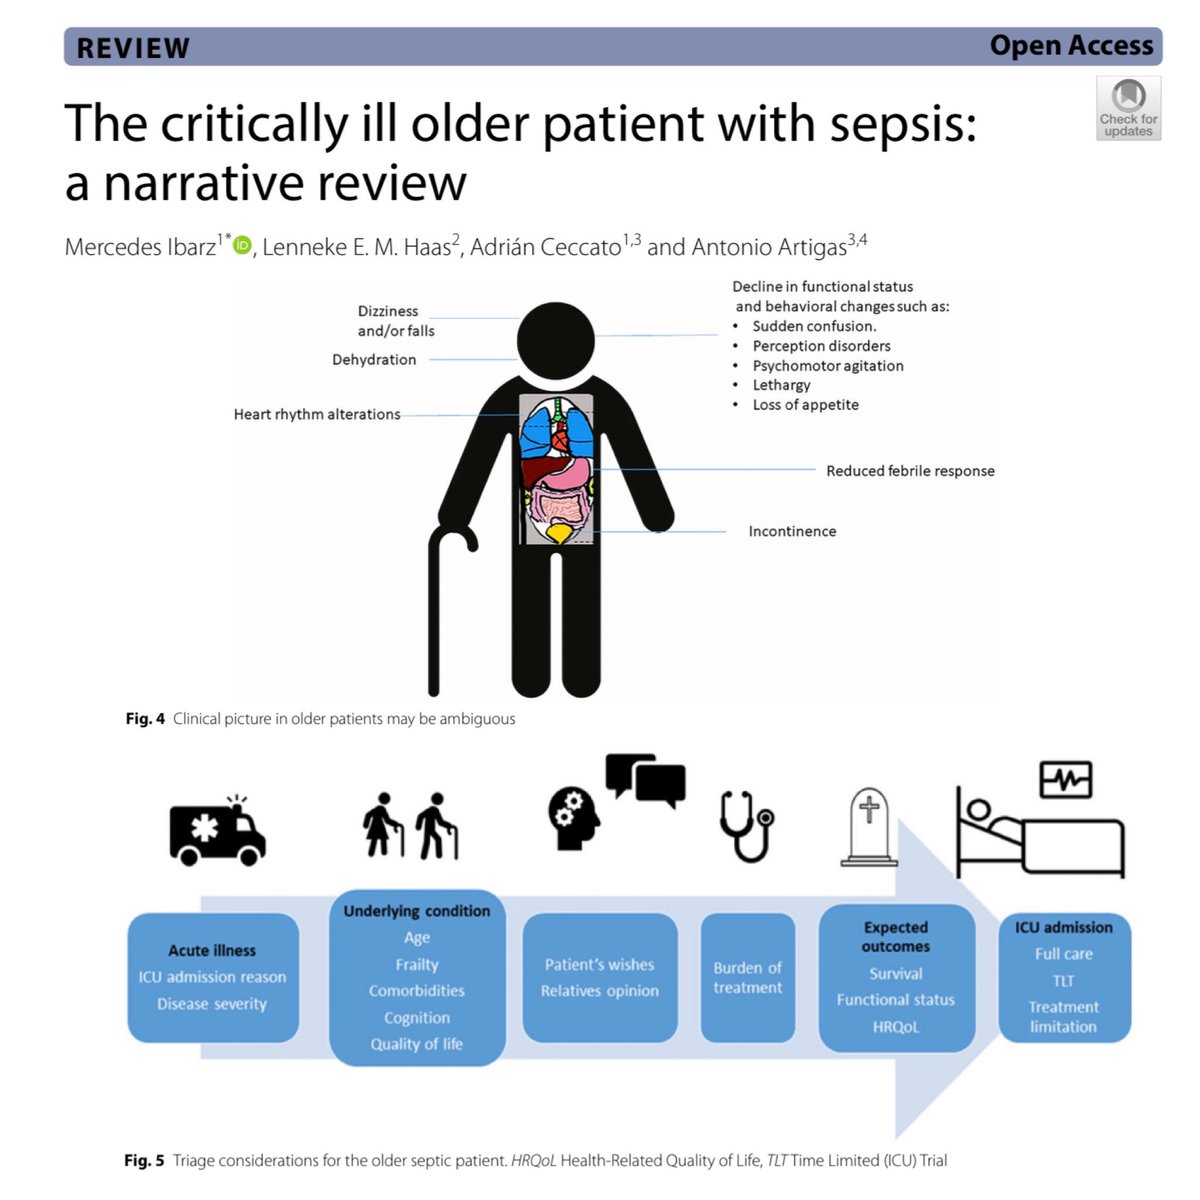 The critically ill older patient with sepsis: a narrative review annalsofintensivecare.springeropen.com/articles/10.11… via @CeccatoAdrian et al